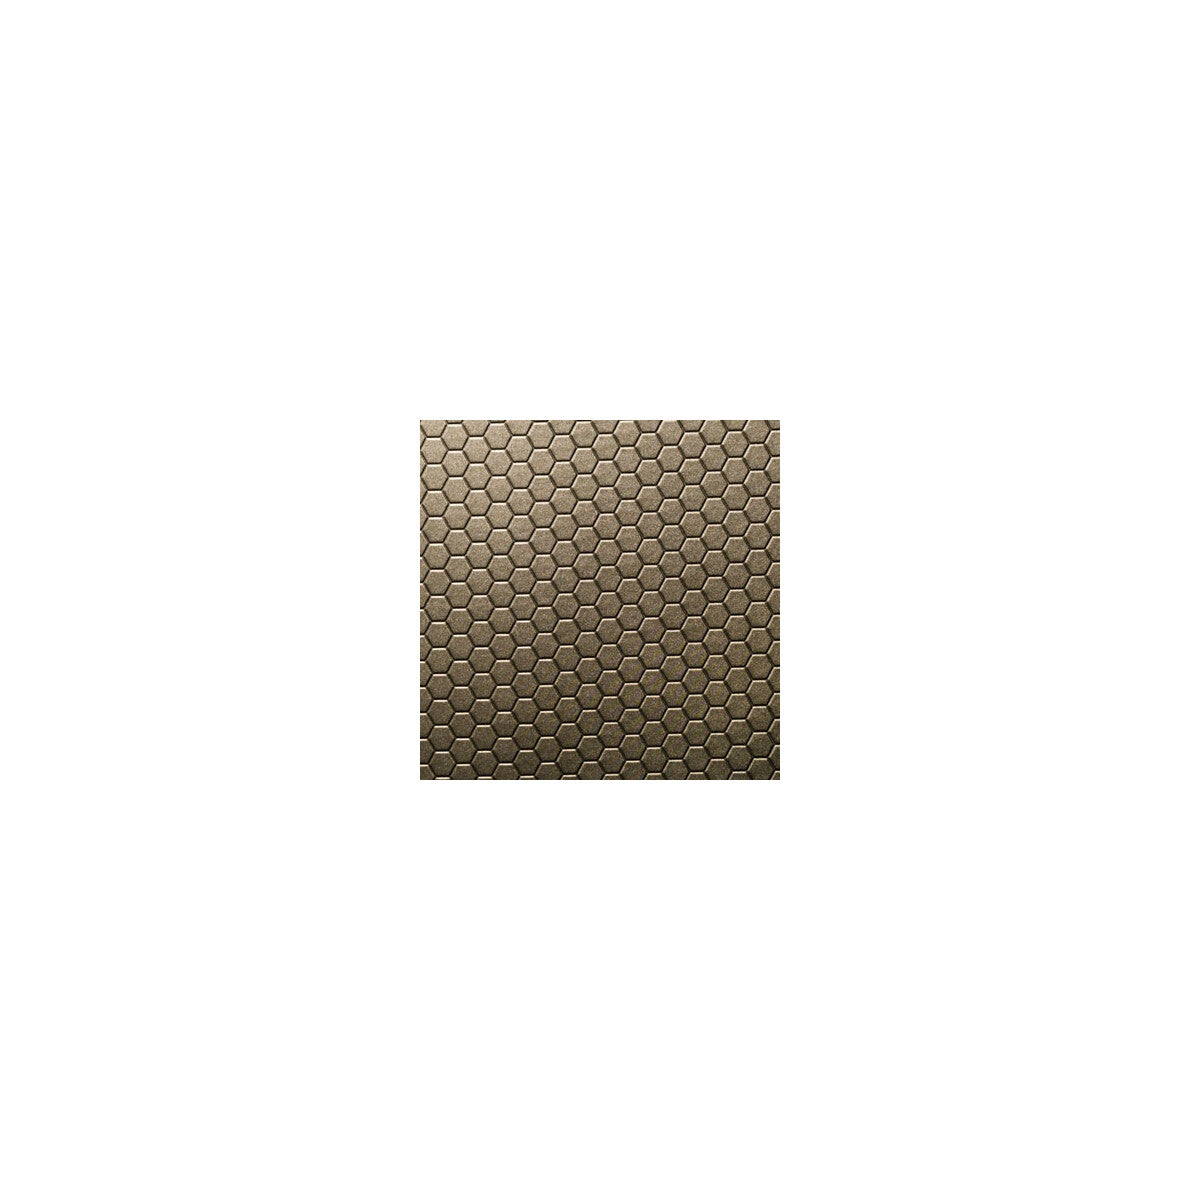 Deja Vu fabric in bronze color - pattern DEJA VU.16.0 - by Kravet Contract in the Sta-Kleen collection